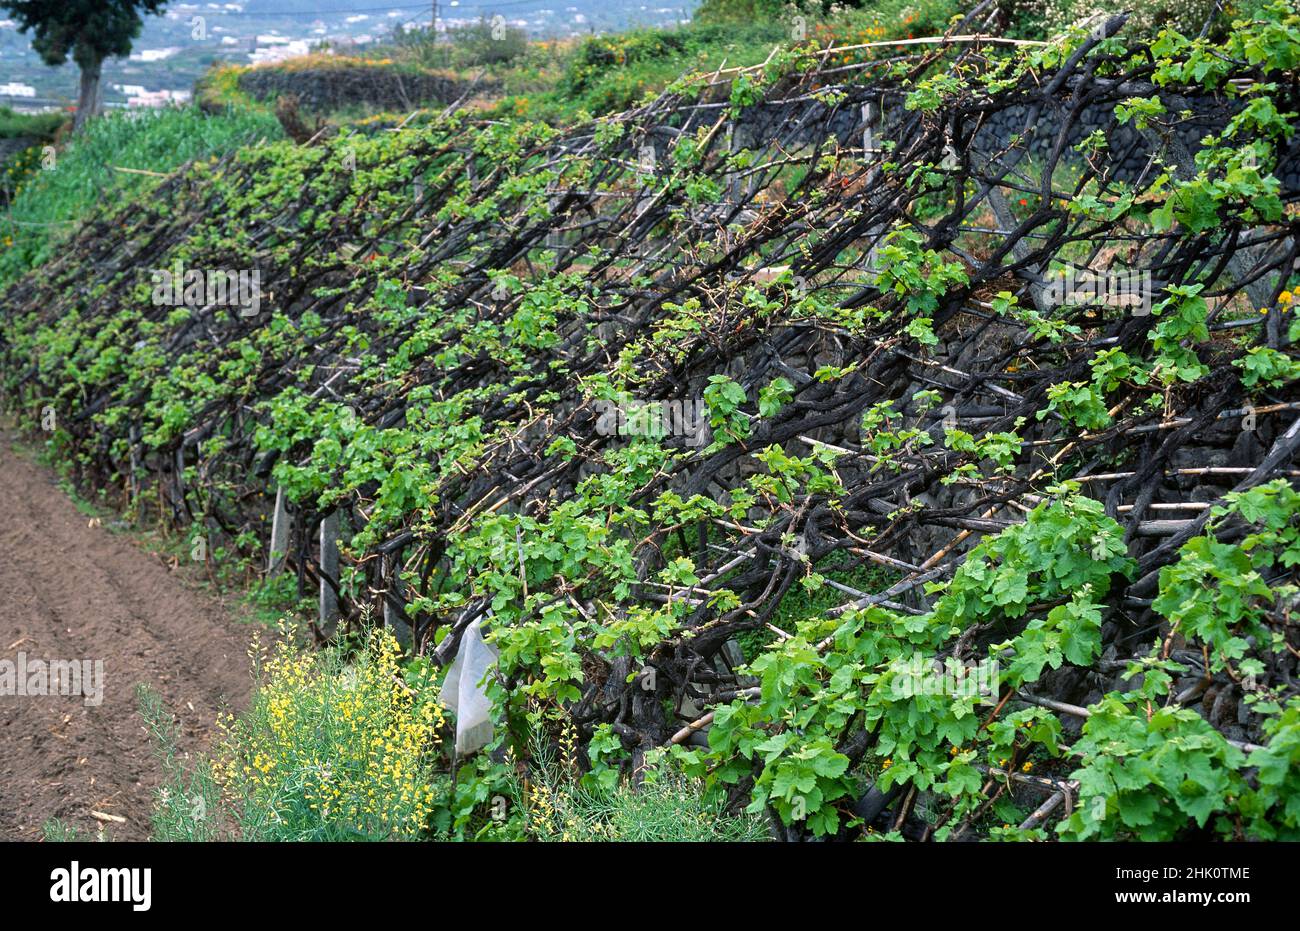 Vineyard (Vitis vinifera) in Tenerife, Canary Islands, Spain. Stock Photo